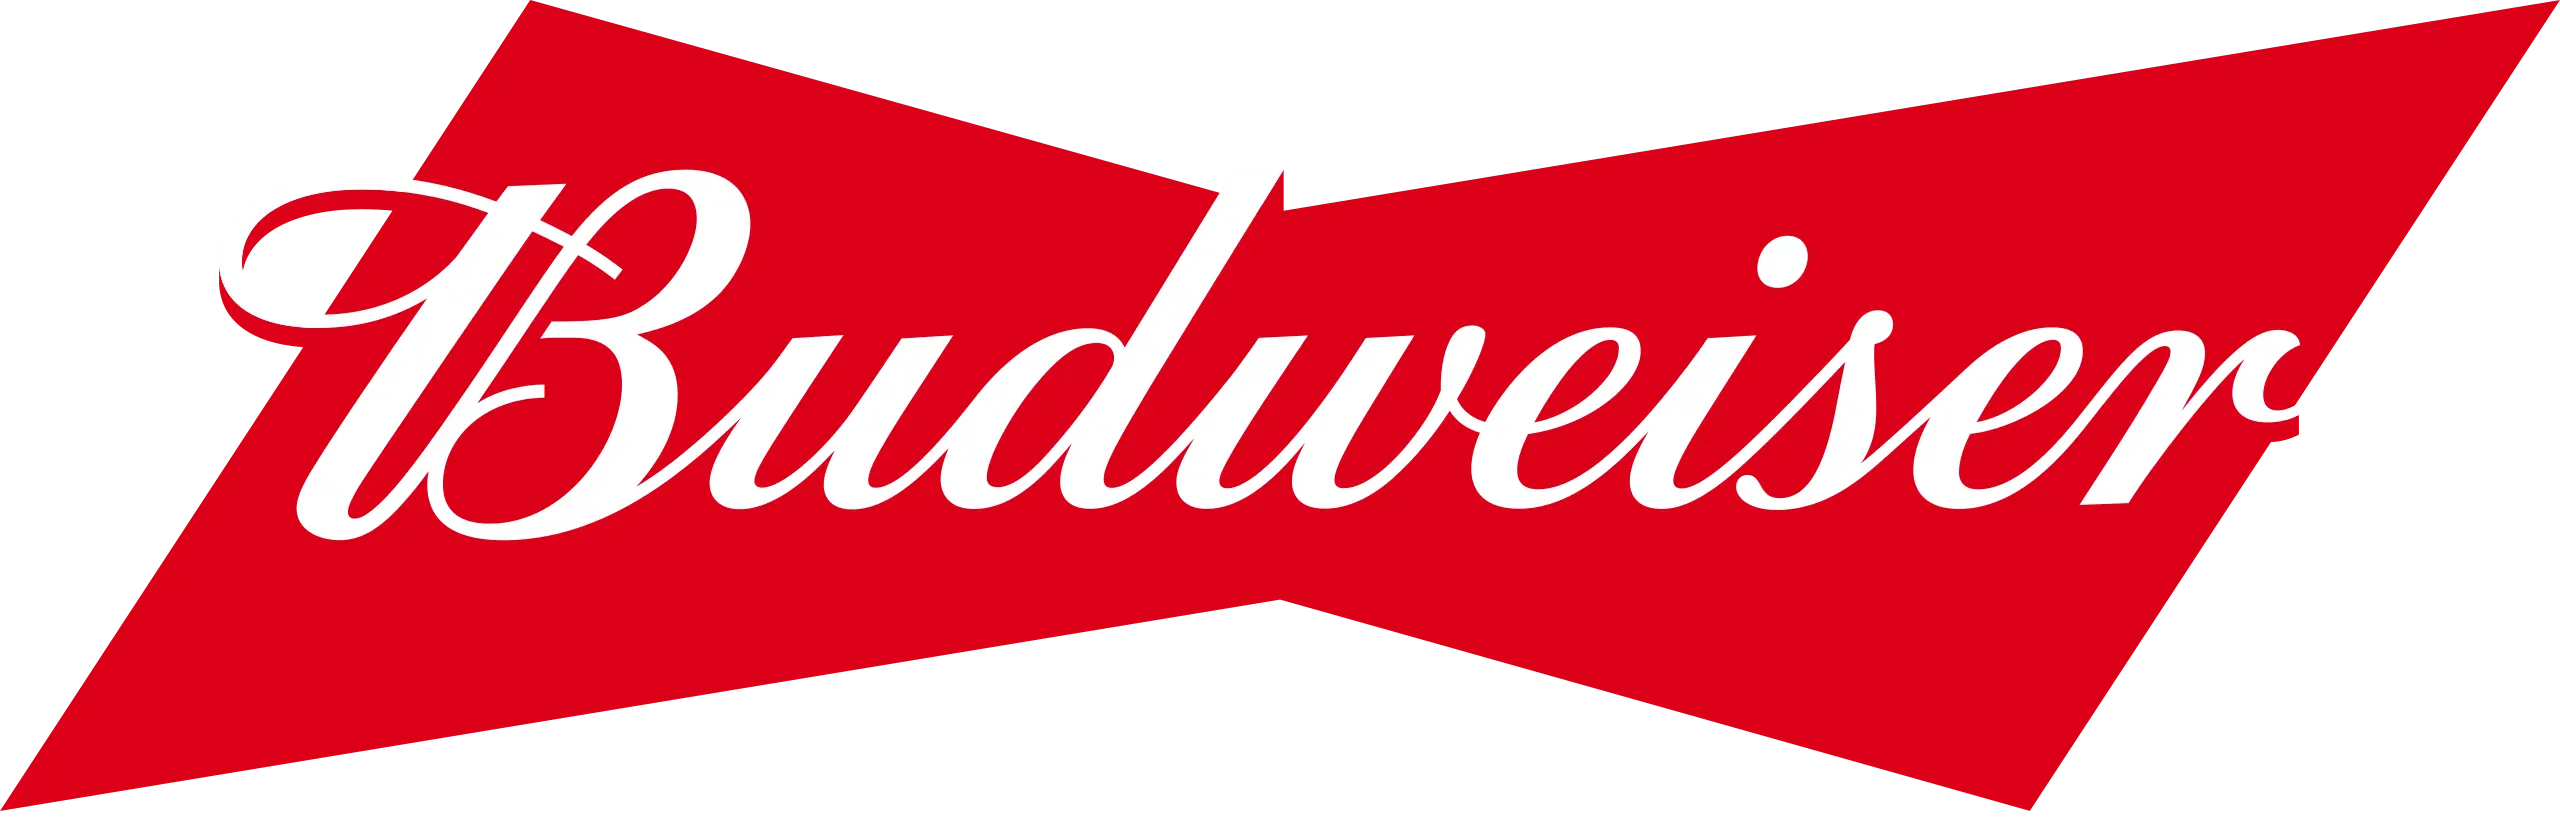 budweiser logo 1